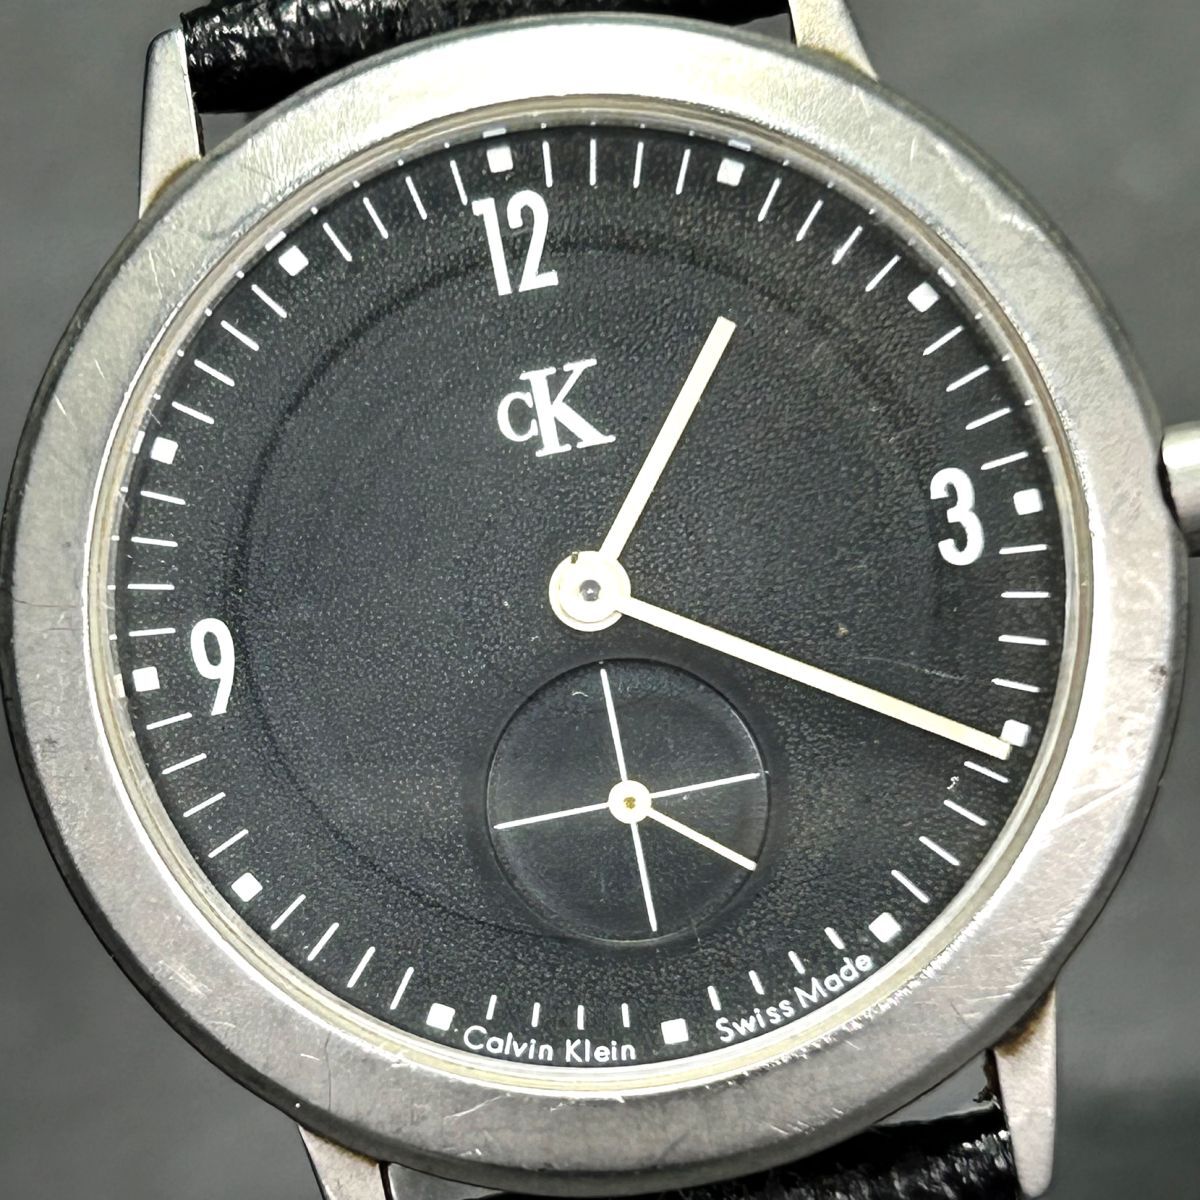 Calvin Klein カルバンクライン K3212 腕時計 クオーツ アナログ スモールセコンド ブラック文字盤 ステンレススチール 新品電池交換済みの画像1